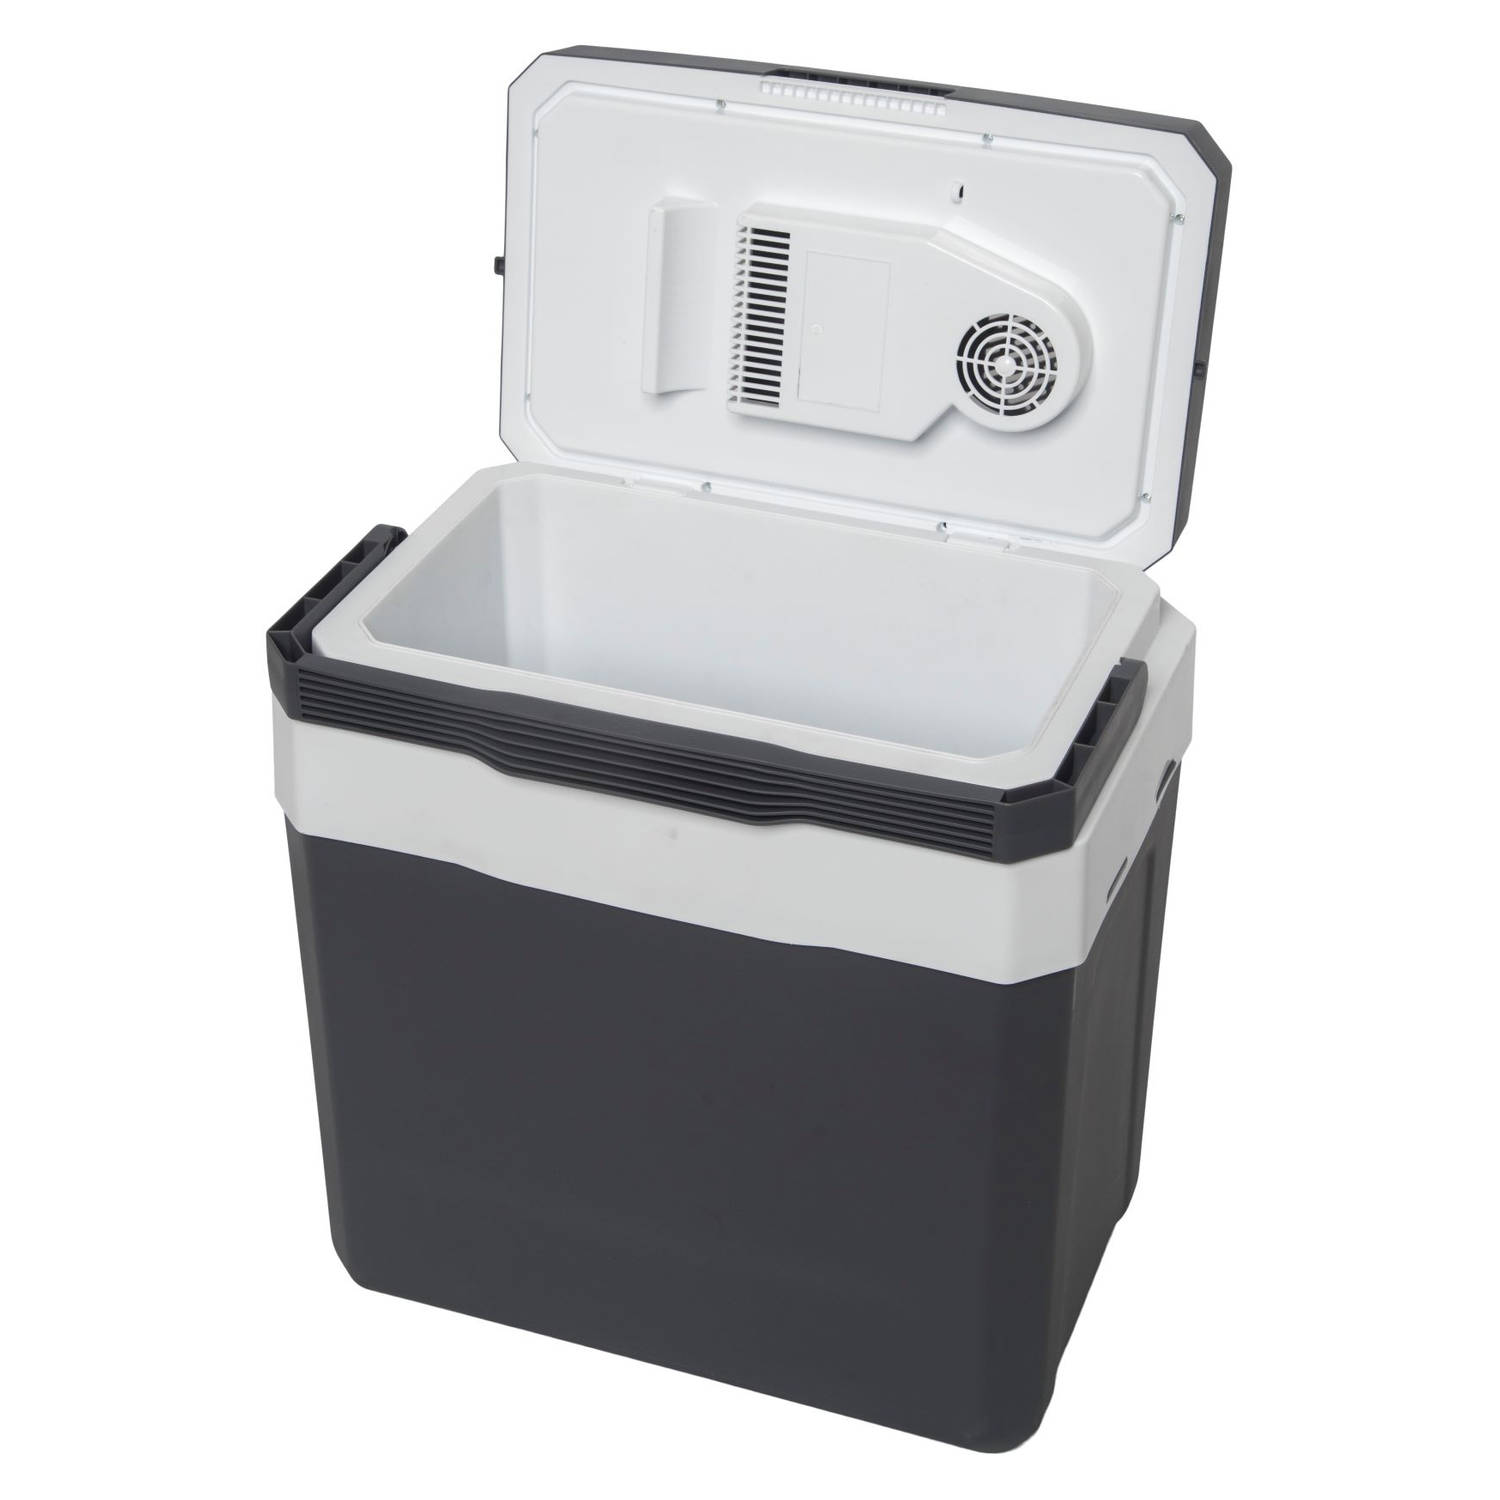 buis Implementeren ga verder Day Thermo-elektrische Koelbox - 23 Liter - 12v/230v - camping koelkast |  Blokker